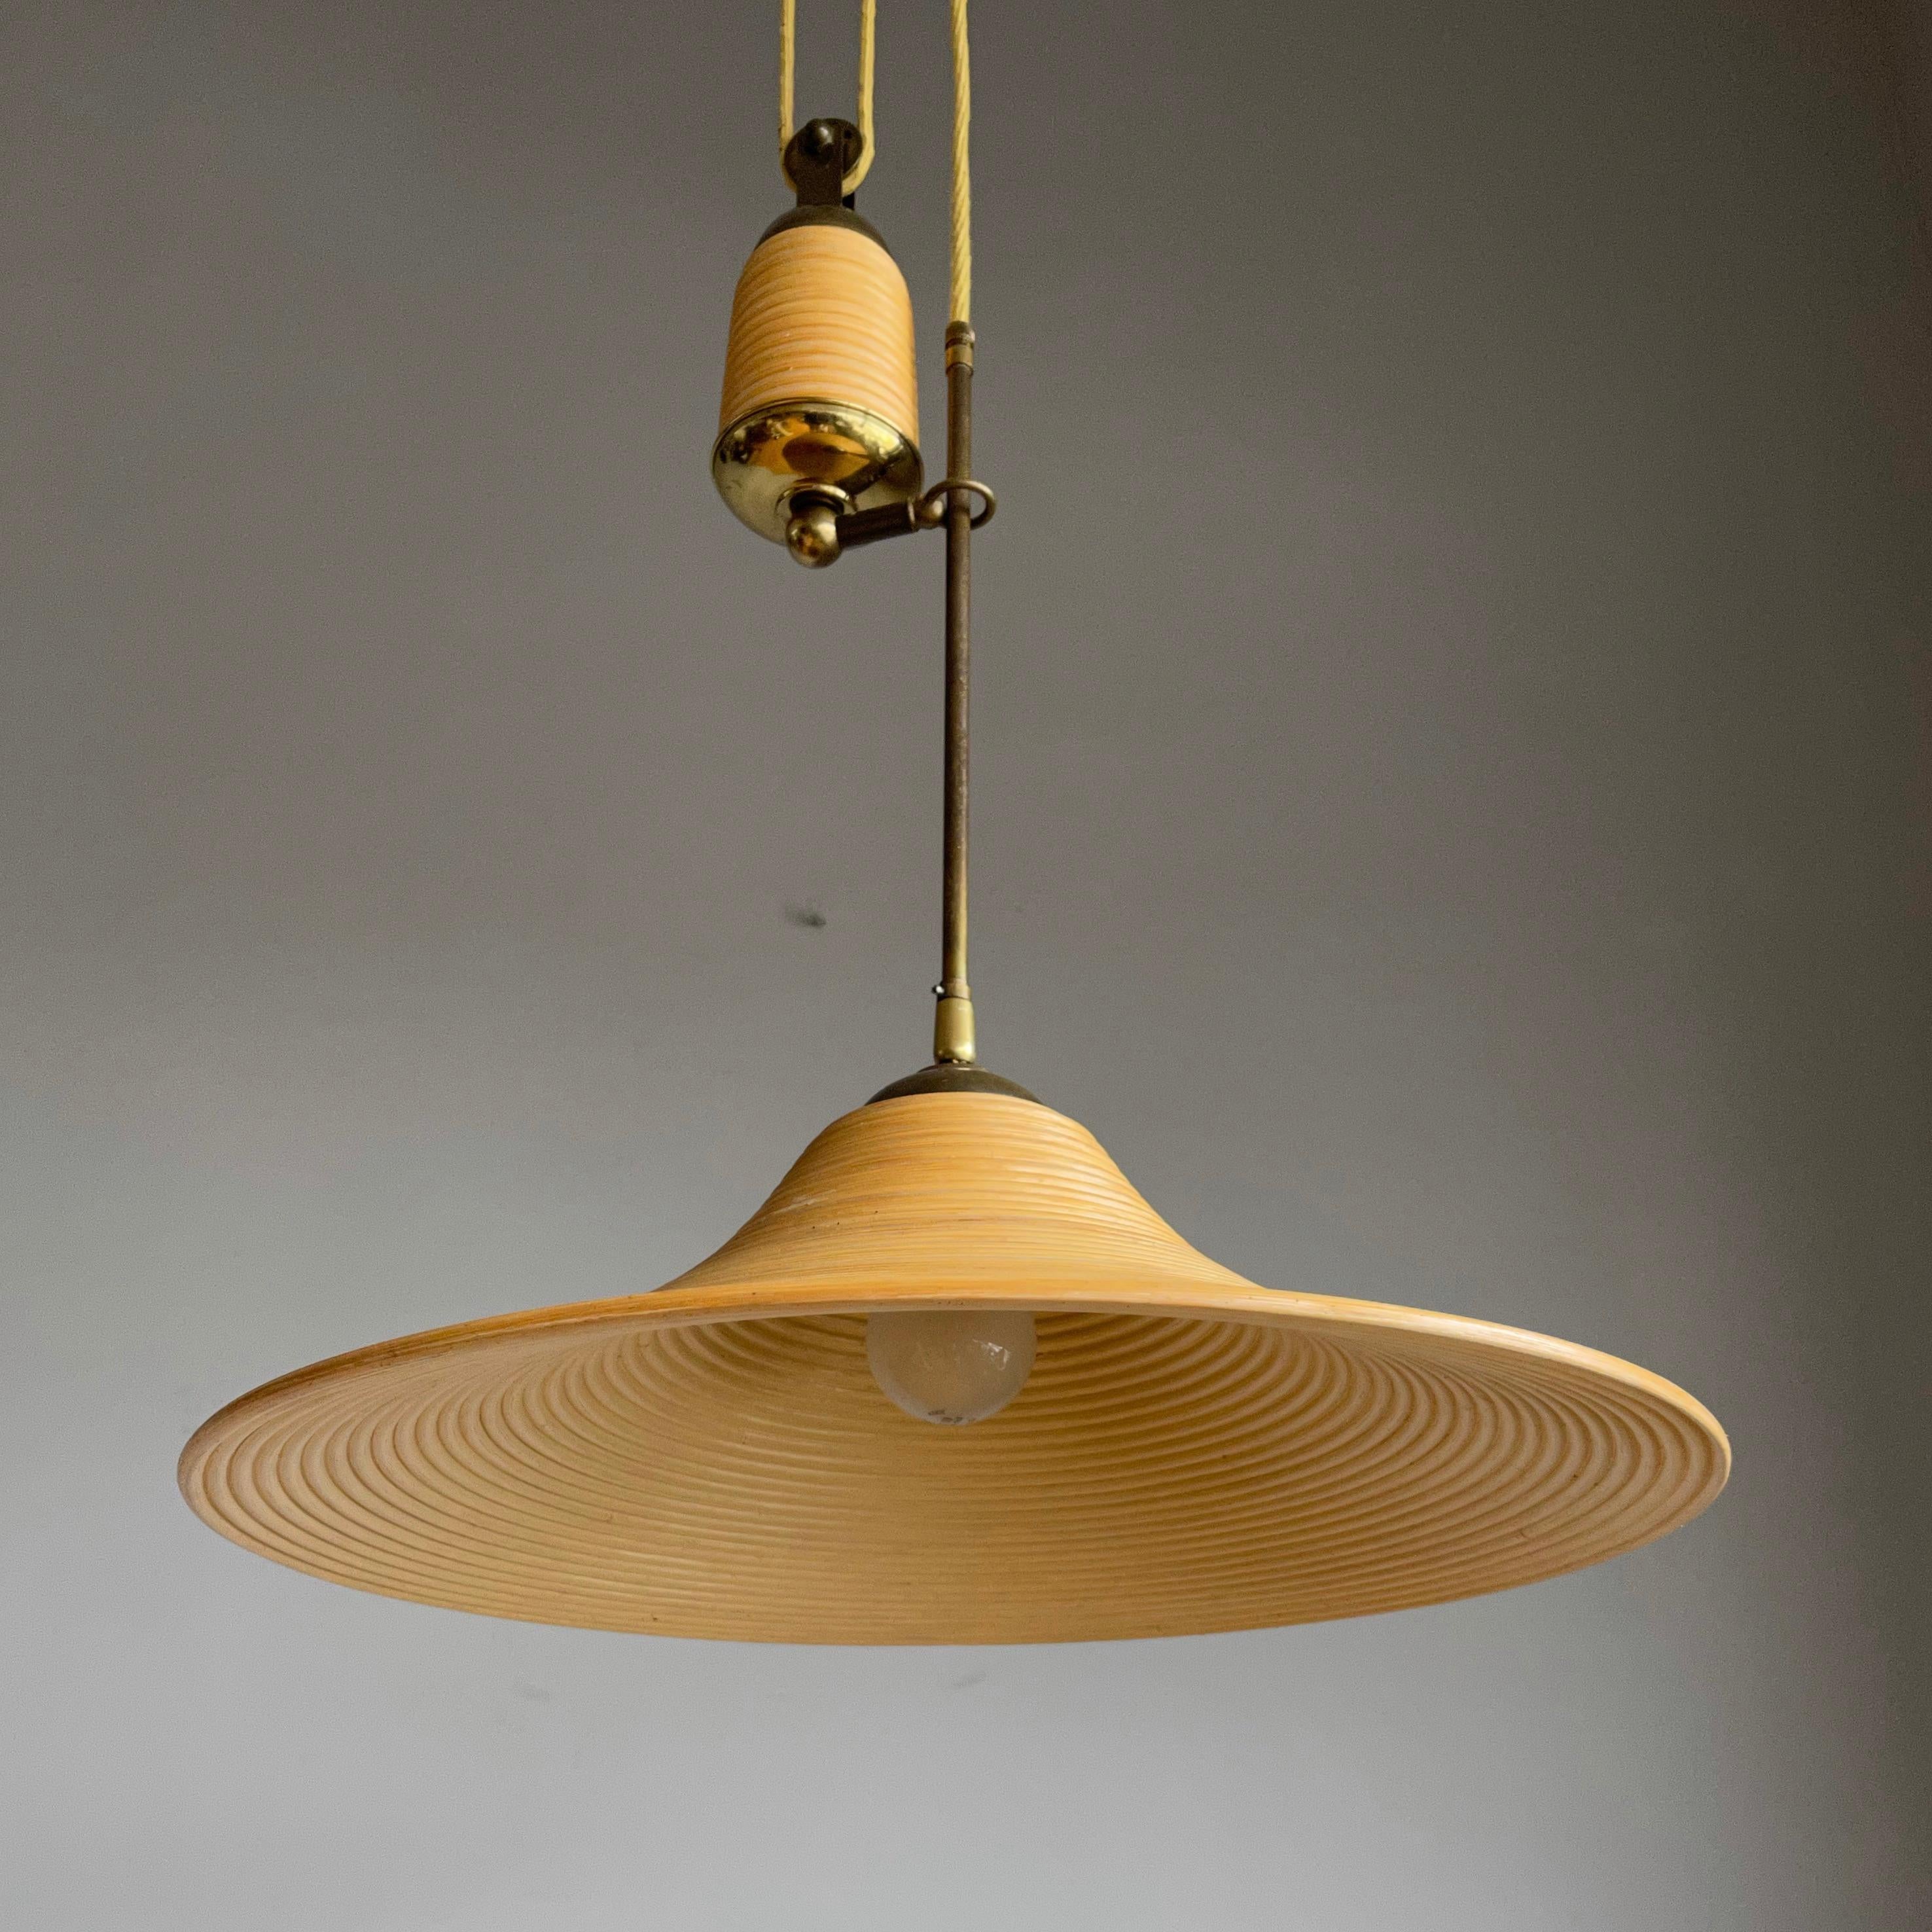 Rare Handcrafted Mid-Century Modern Rattan & Brass Pendant Light / Ceiling Lamp 1